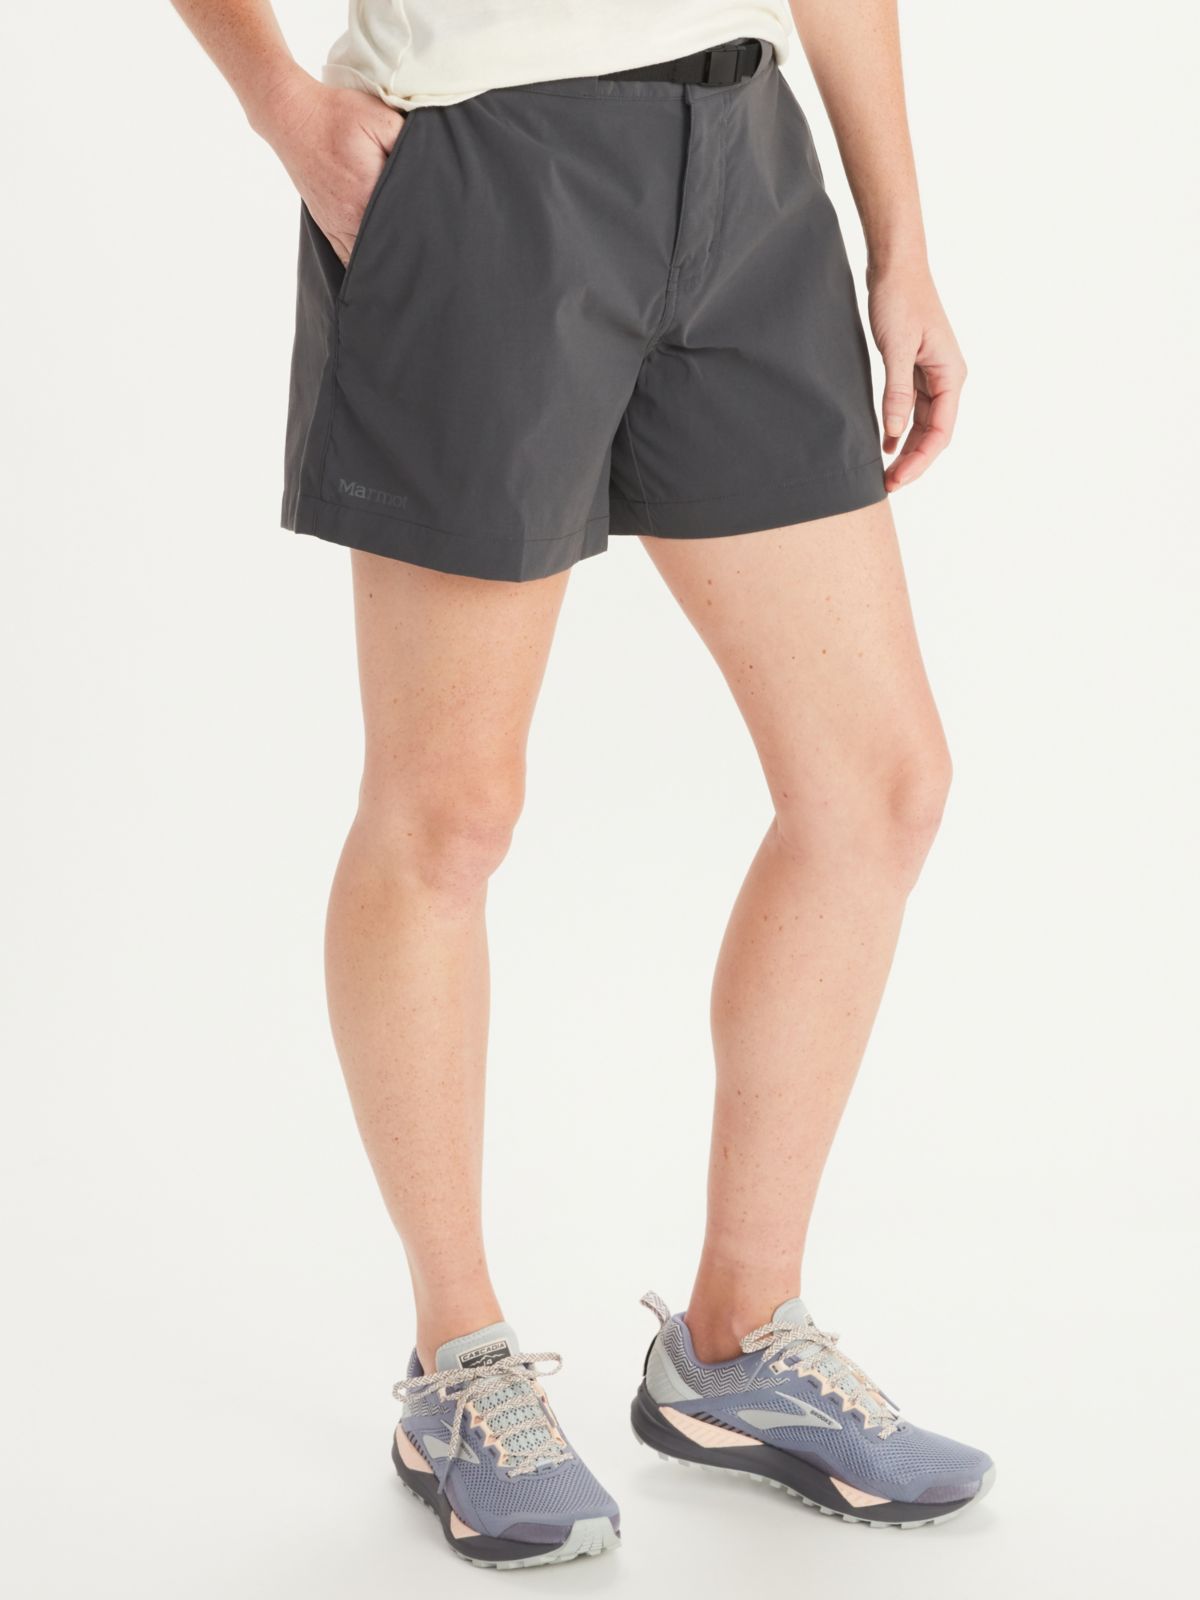 womens hiking shorts